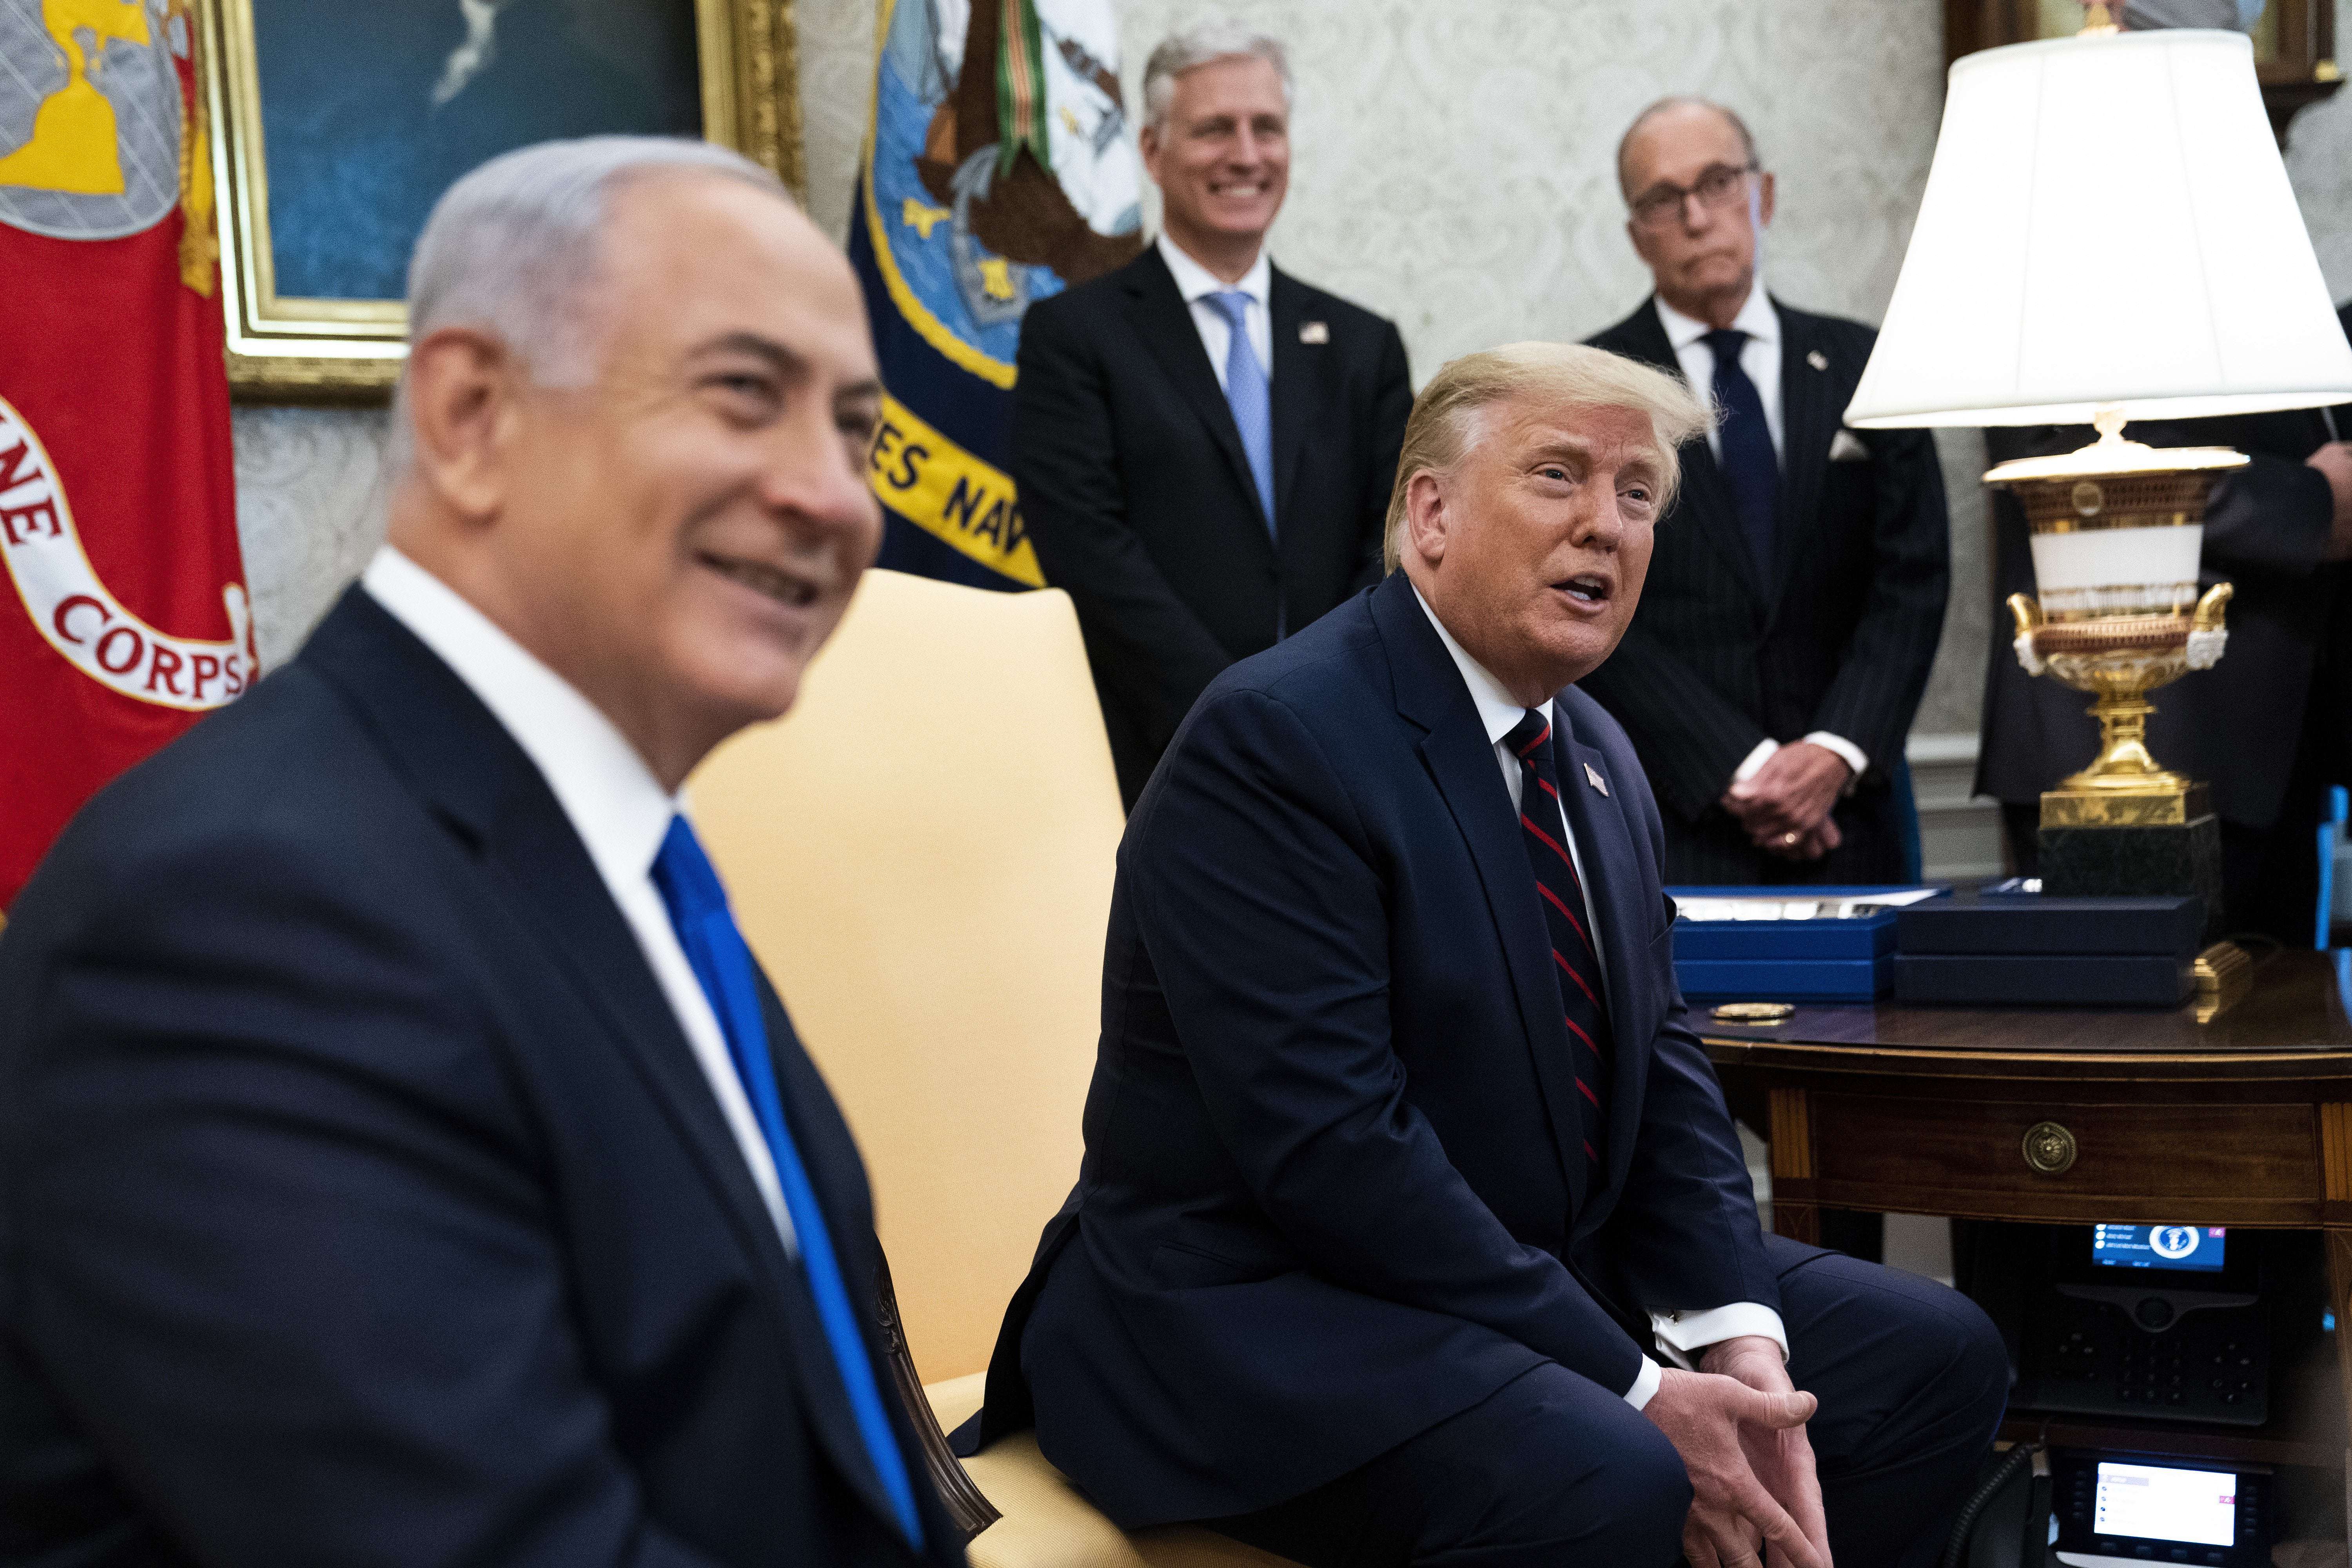 image for ‘F-ck Him’: Trump Lost It After Israel’s Netanyahu Congratulated Biden